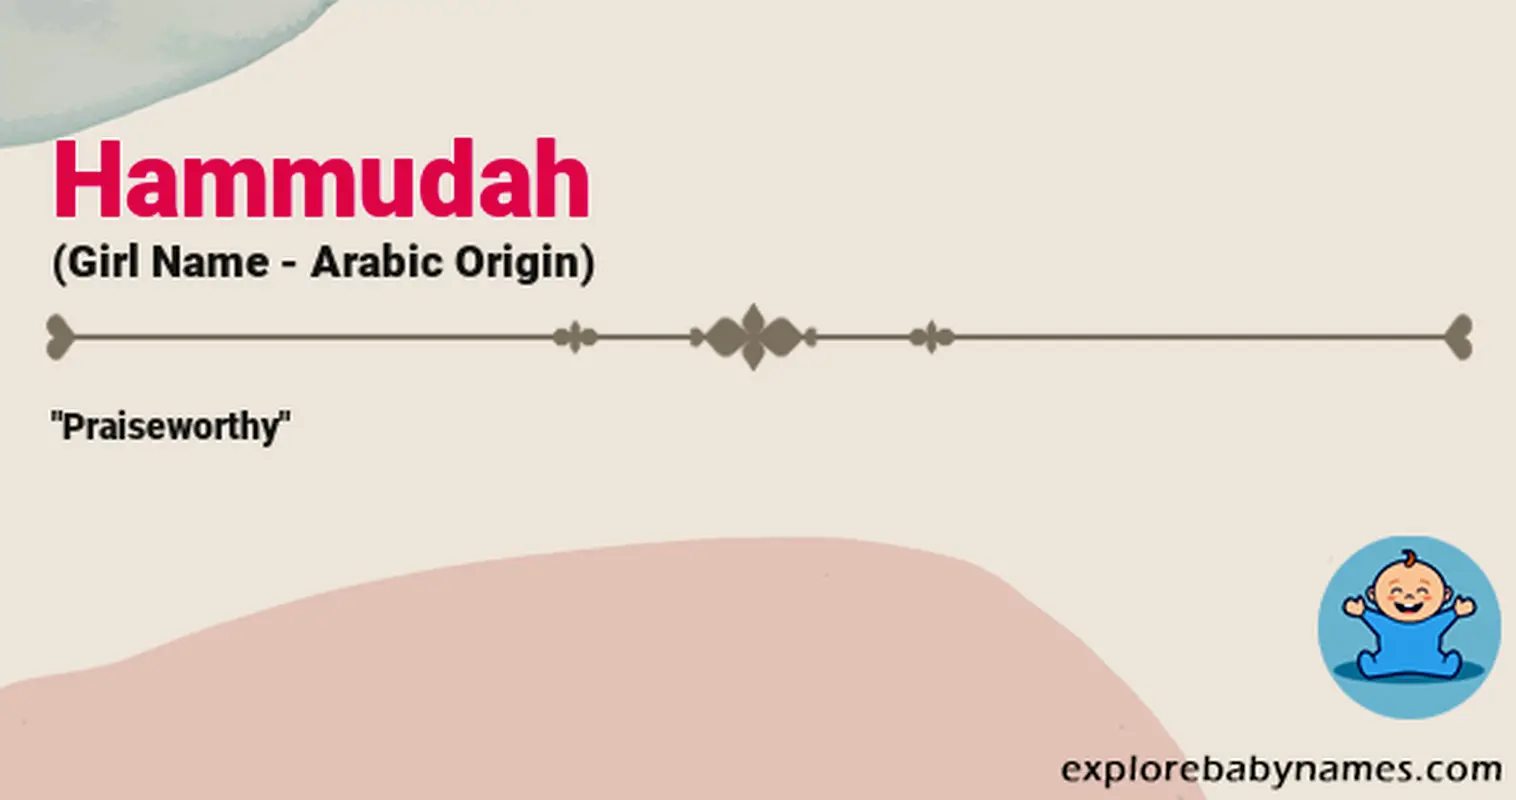 Meaning of Hammudah